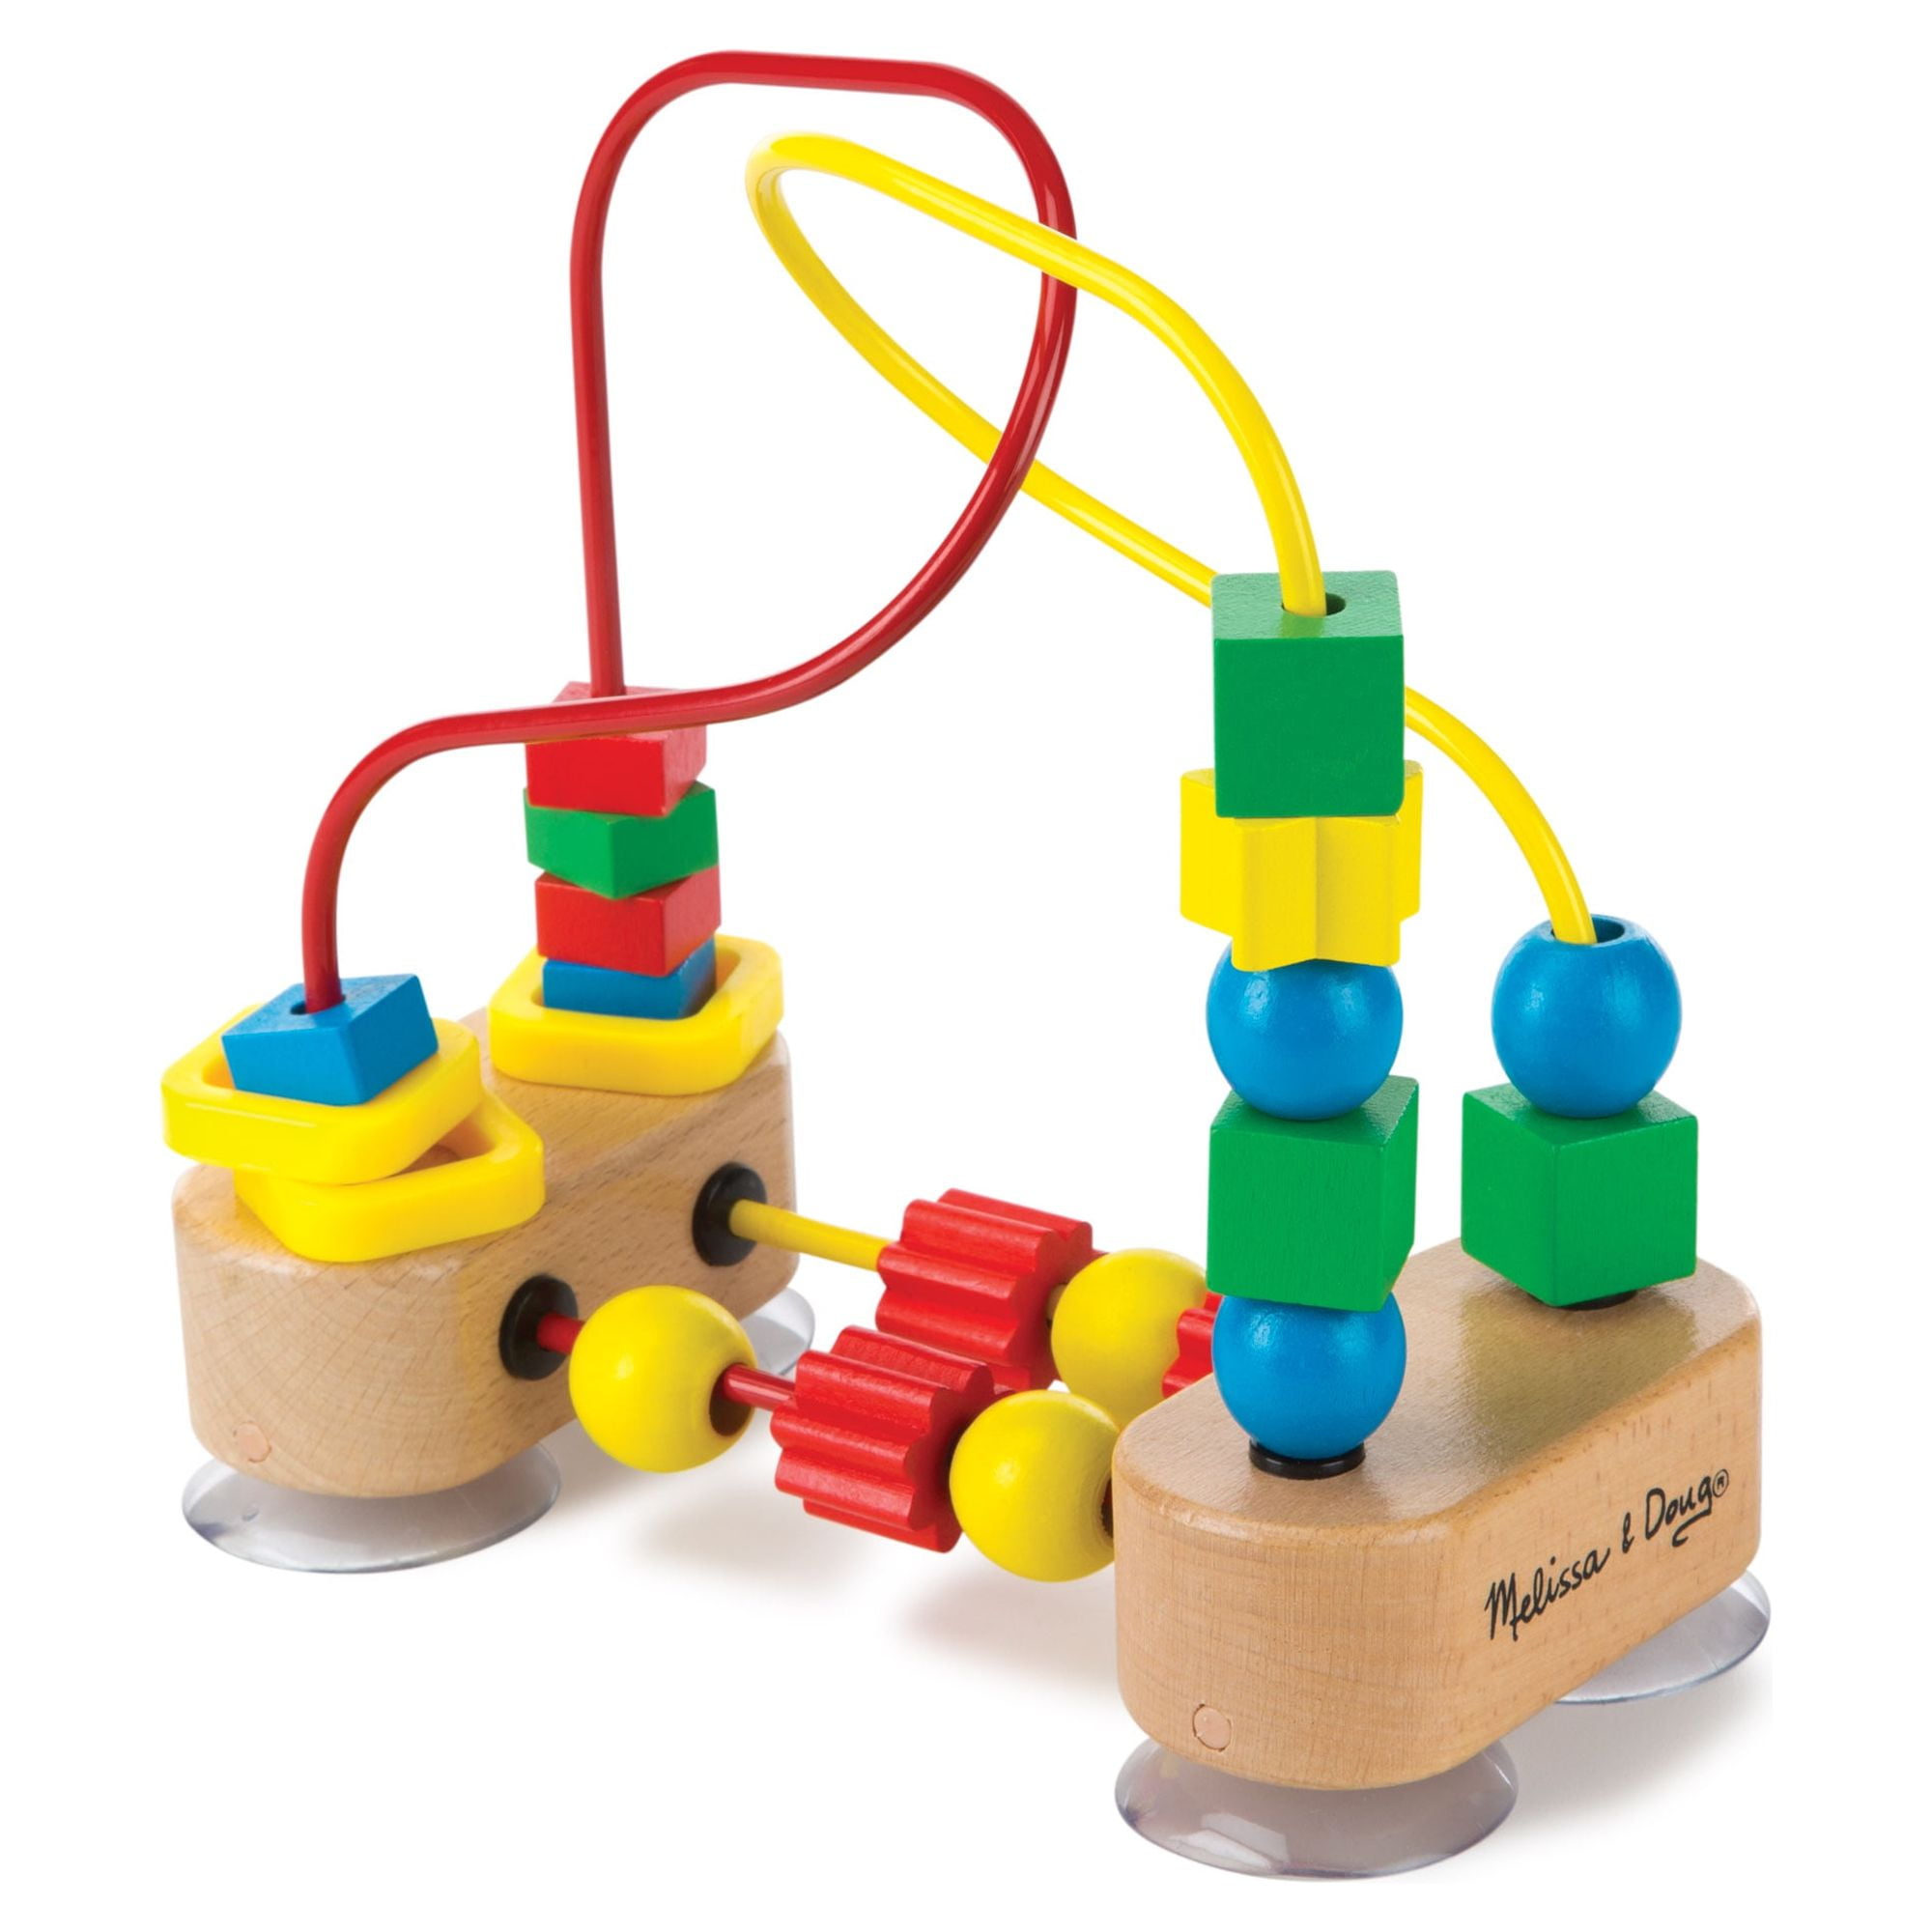 Melissa & Doug: #1 Preschool Brand For Wooden Toys